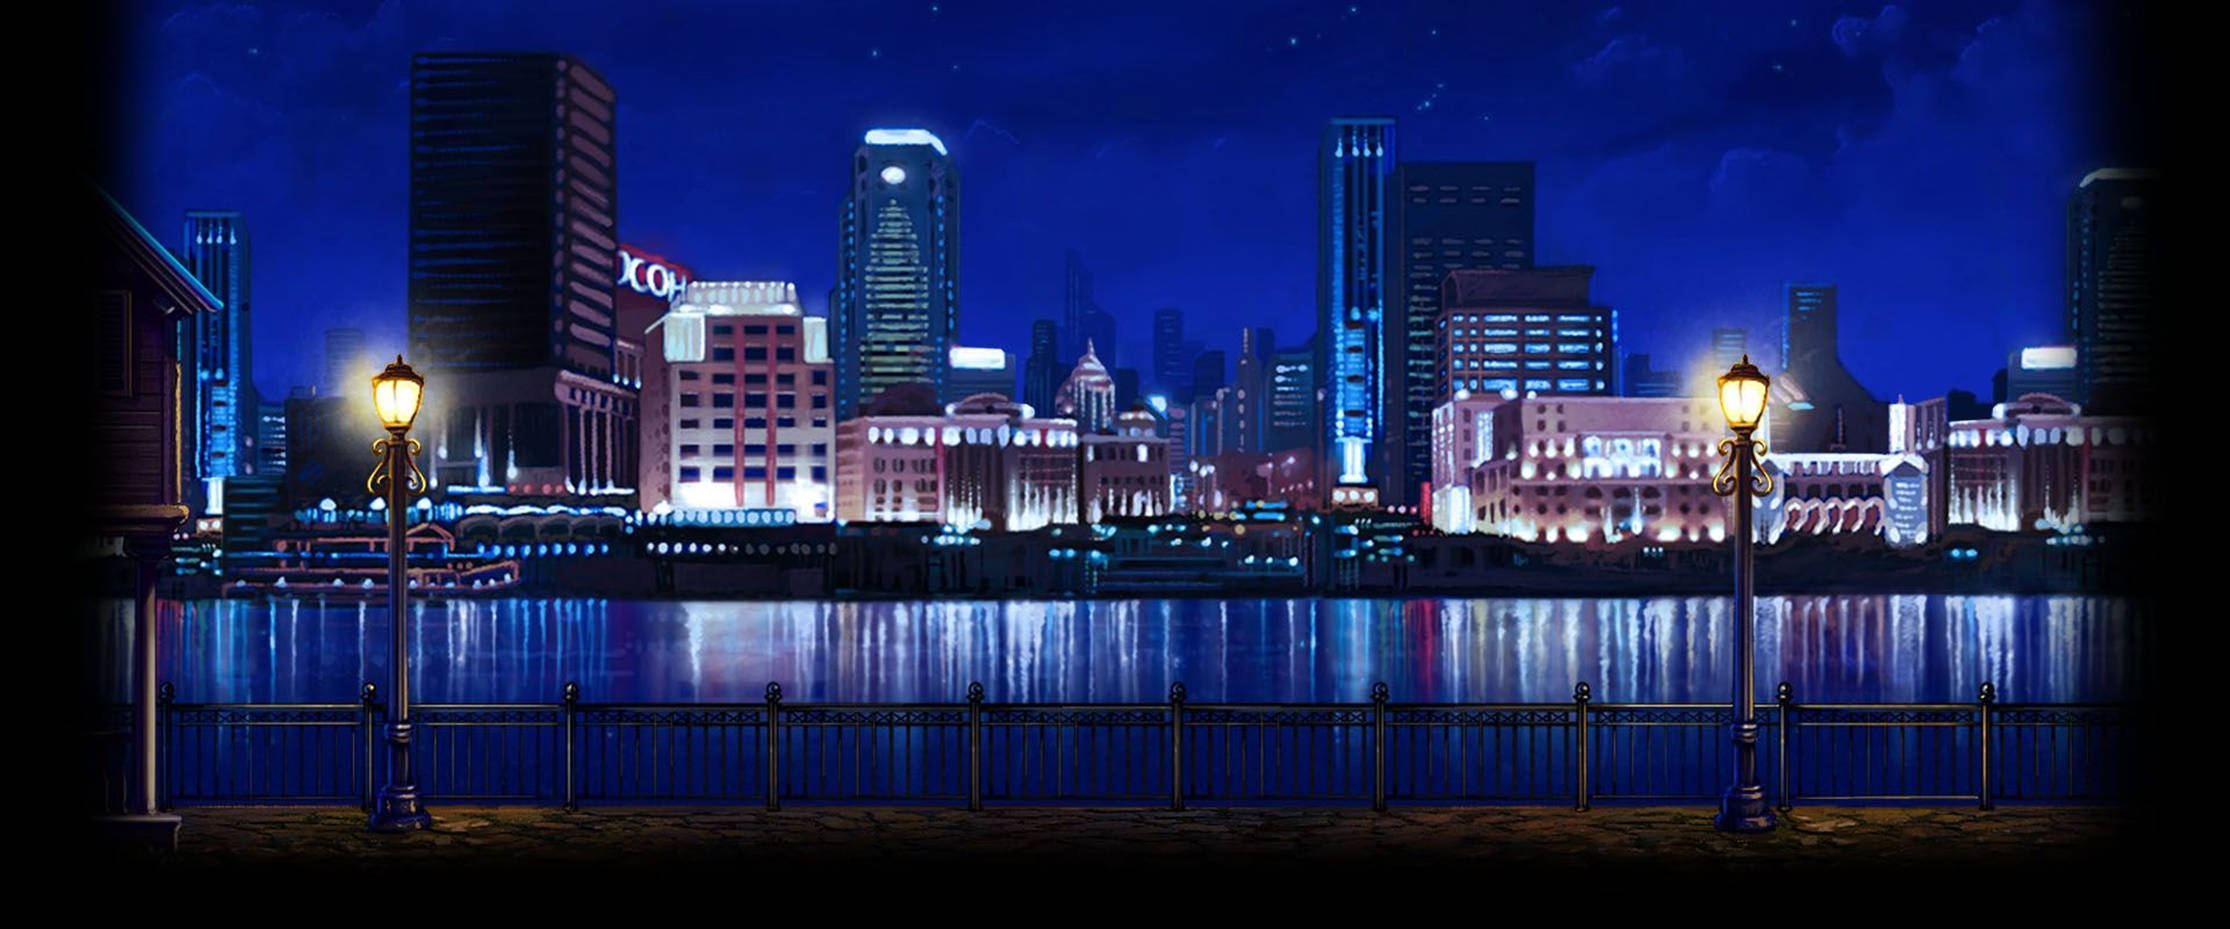 Lo Fi Anime Colorful Citylights Background